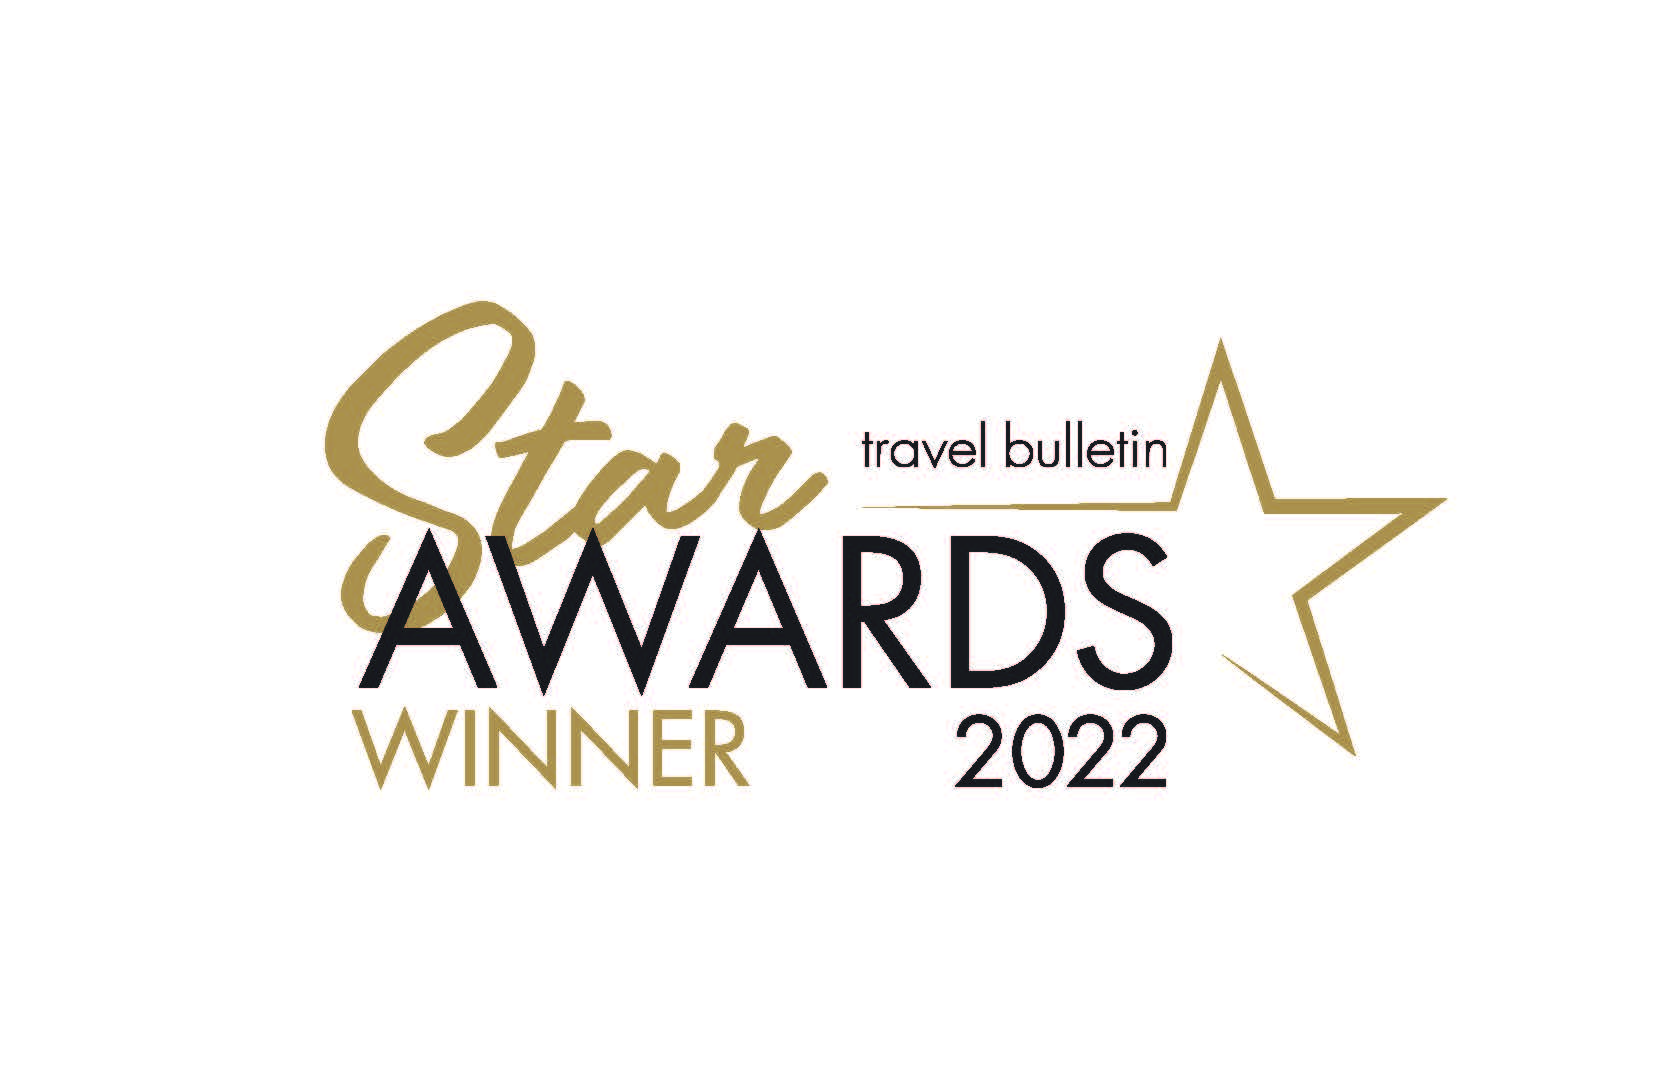 Travel Bulletin Star Awards